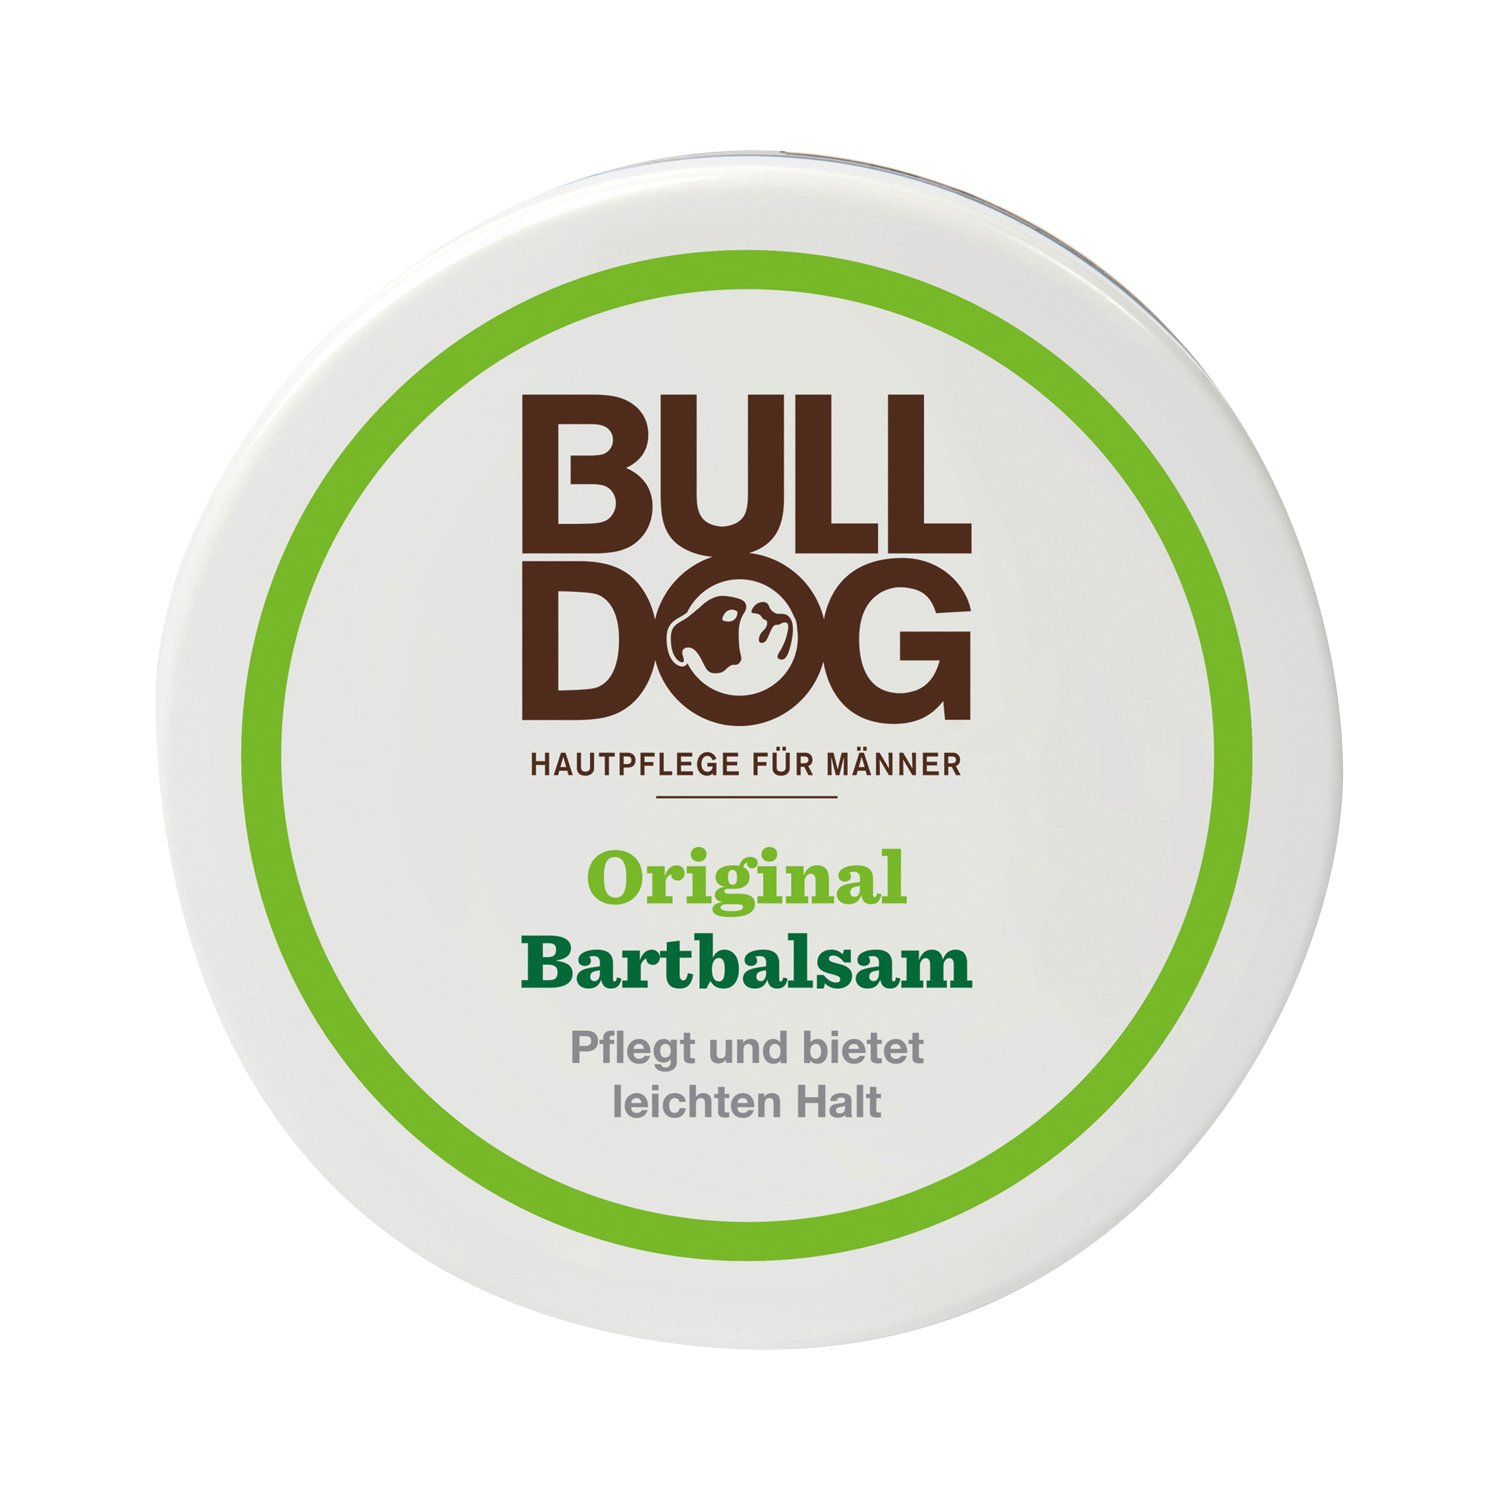 Bulldog - Original Bartbalsam